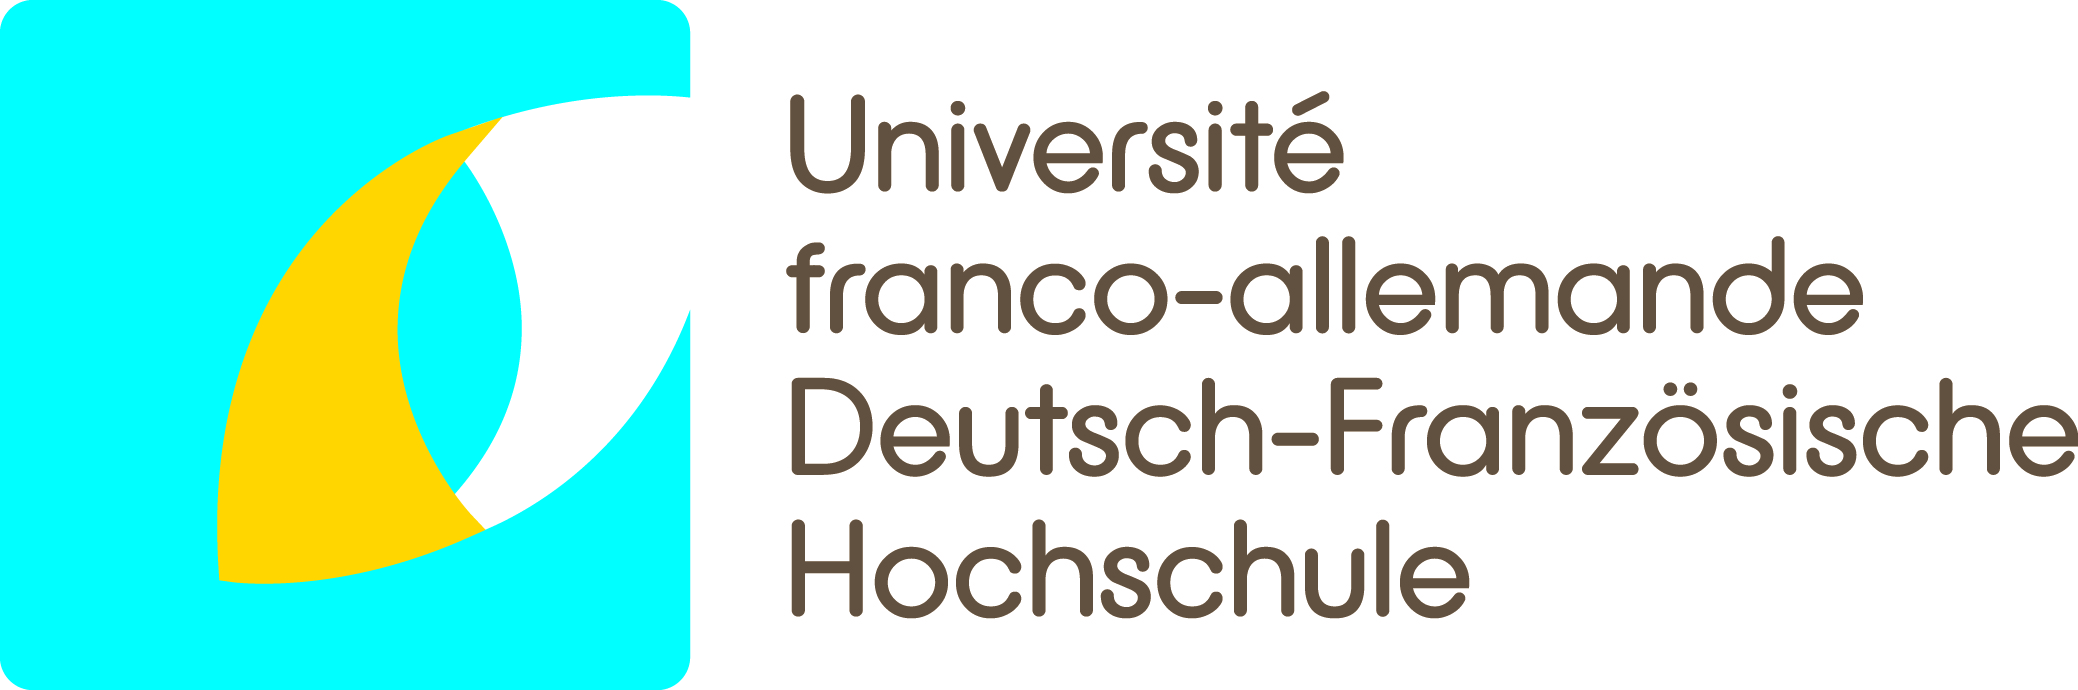 Franco-German University